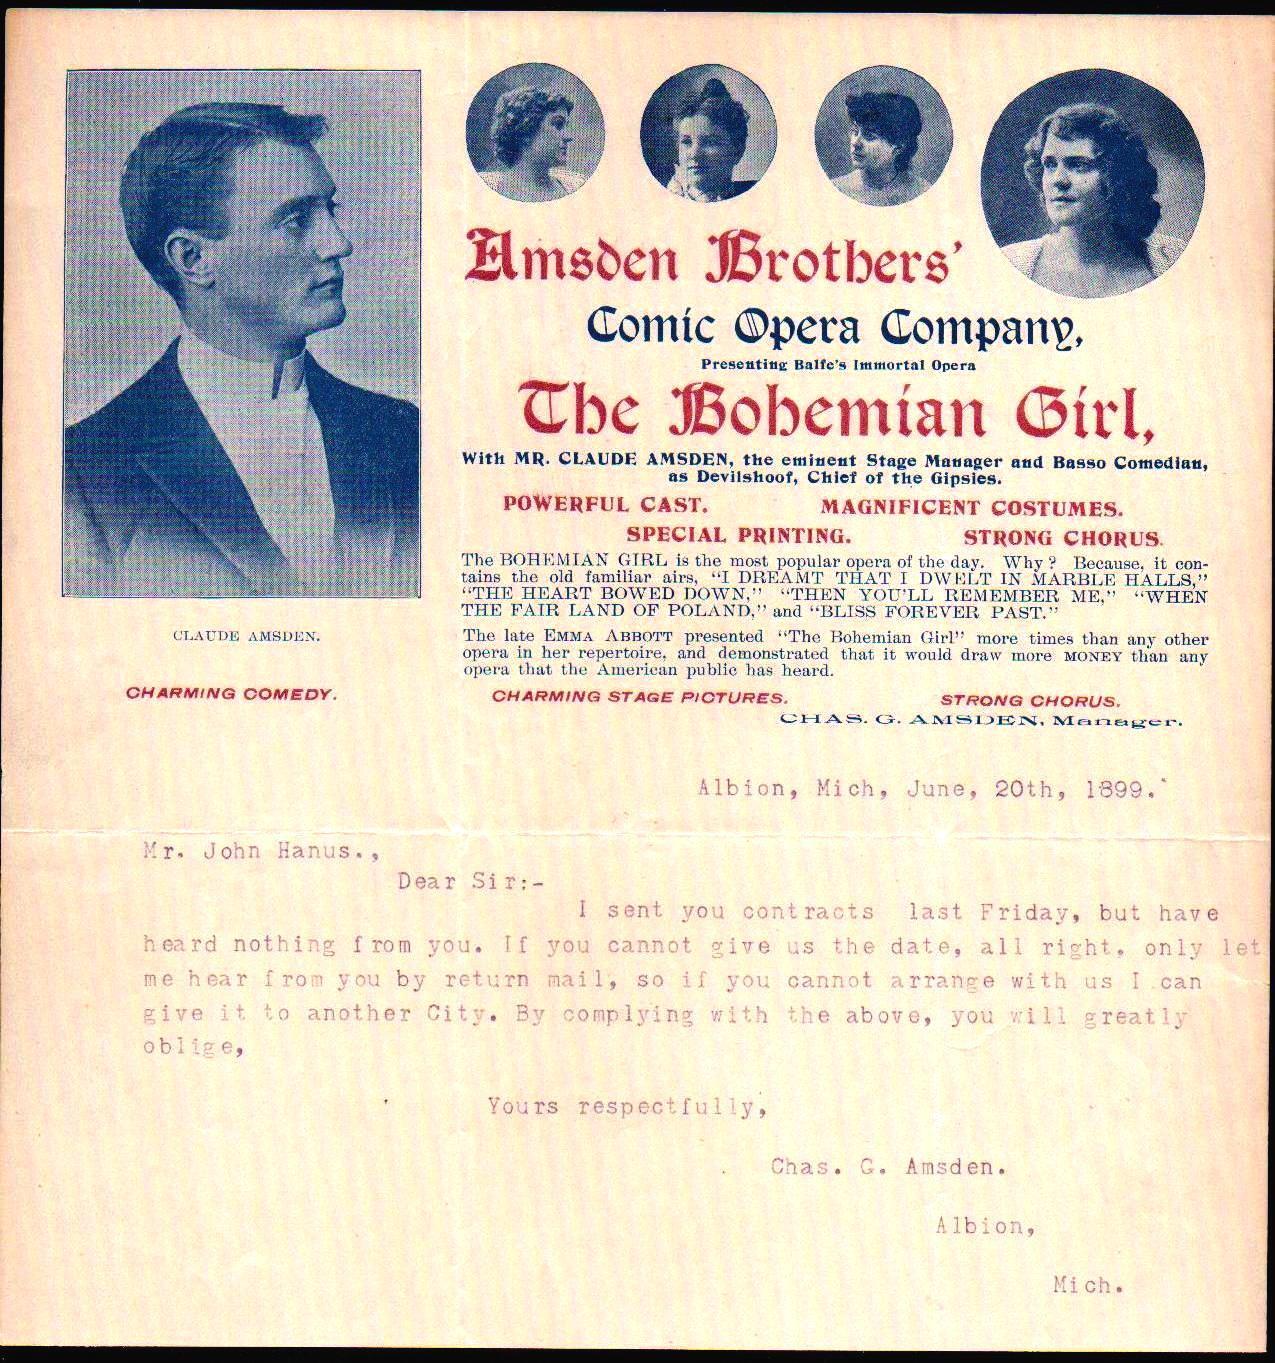 1899 Albion Mi - Vaudeville - Amsden Brothers - Comic Opera Co Letter Head Bill